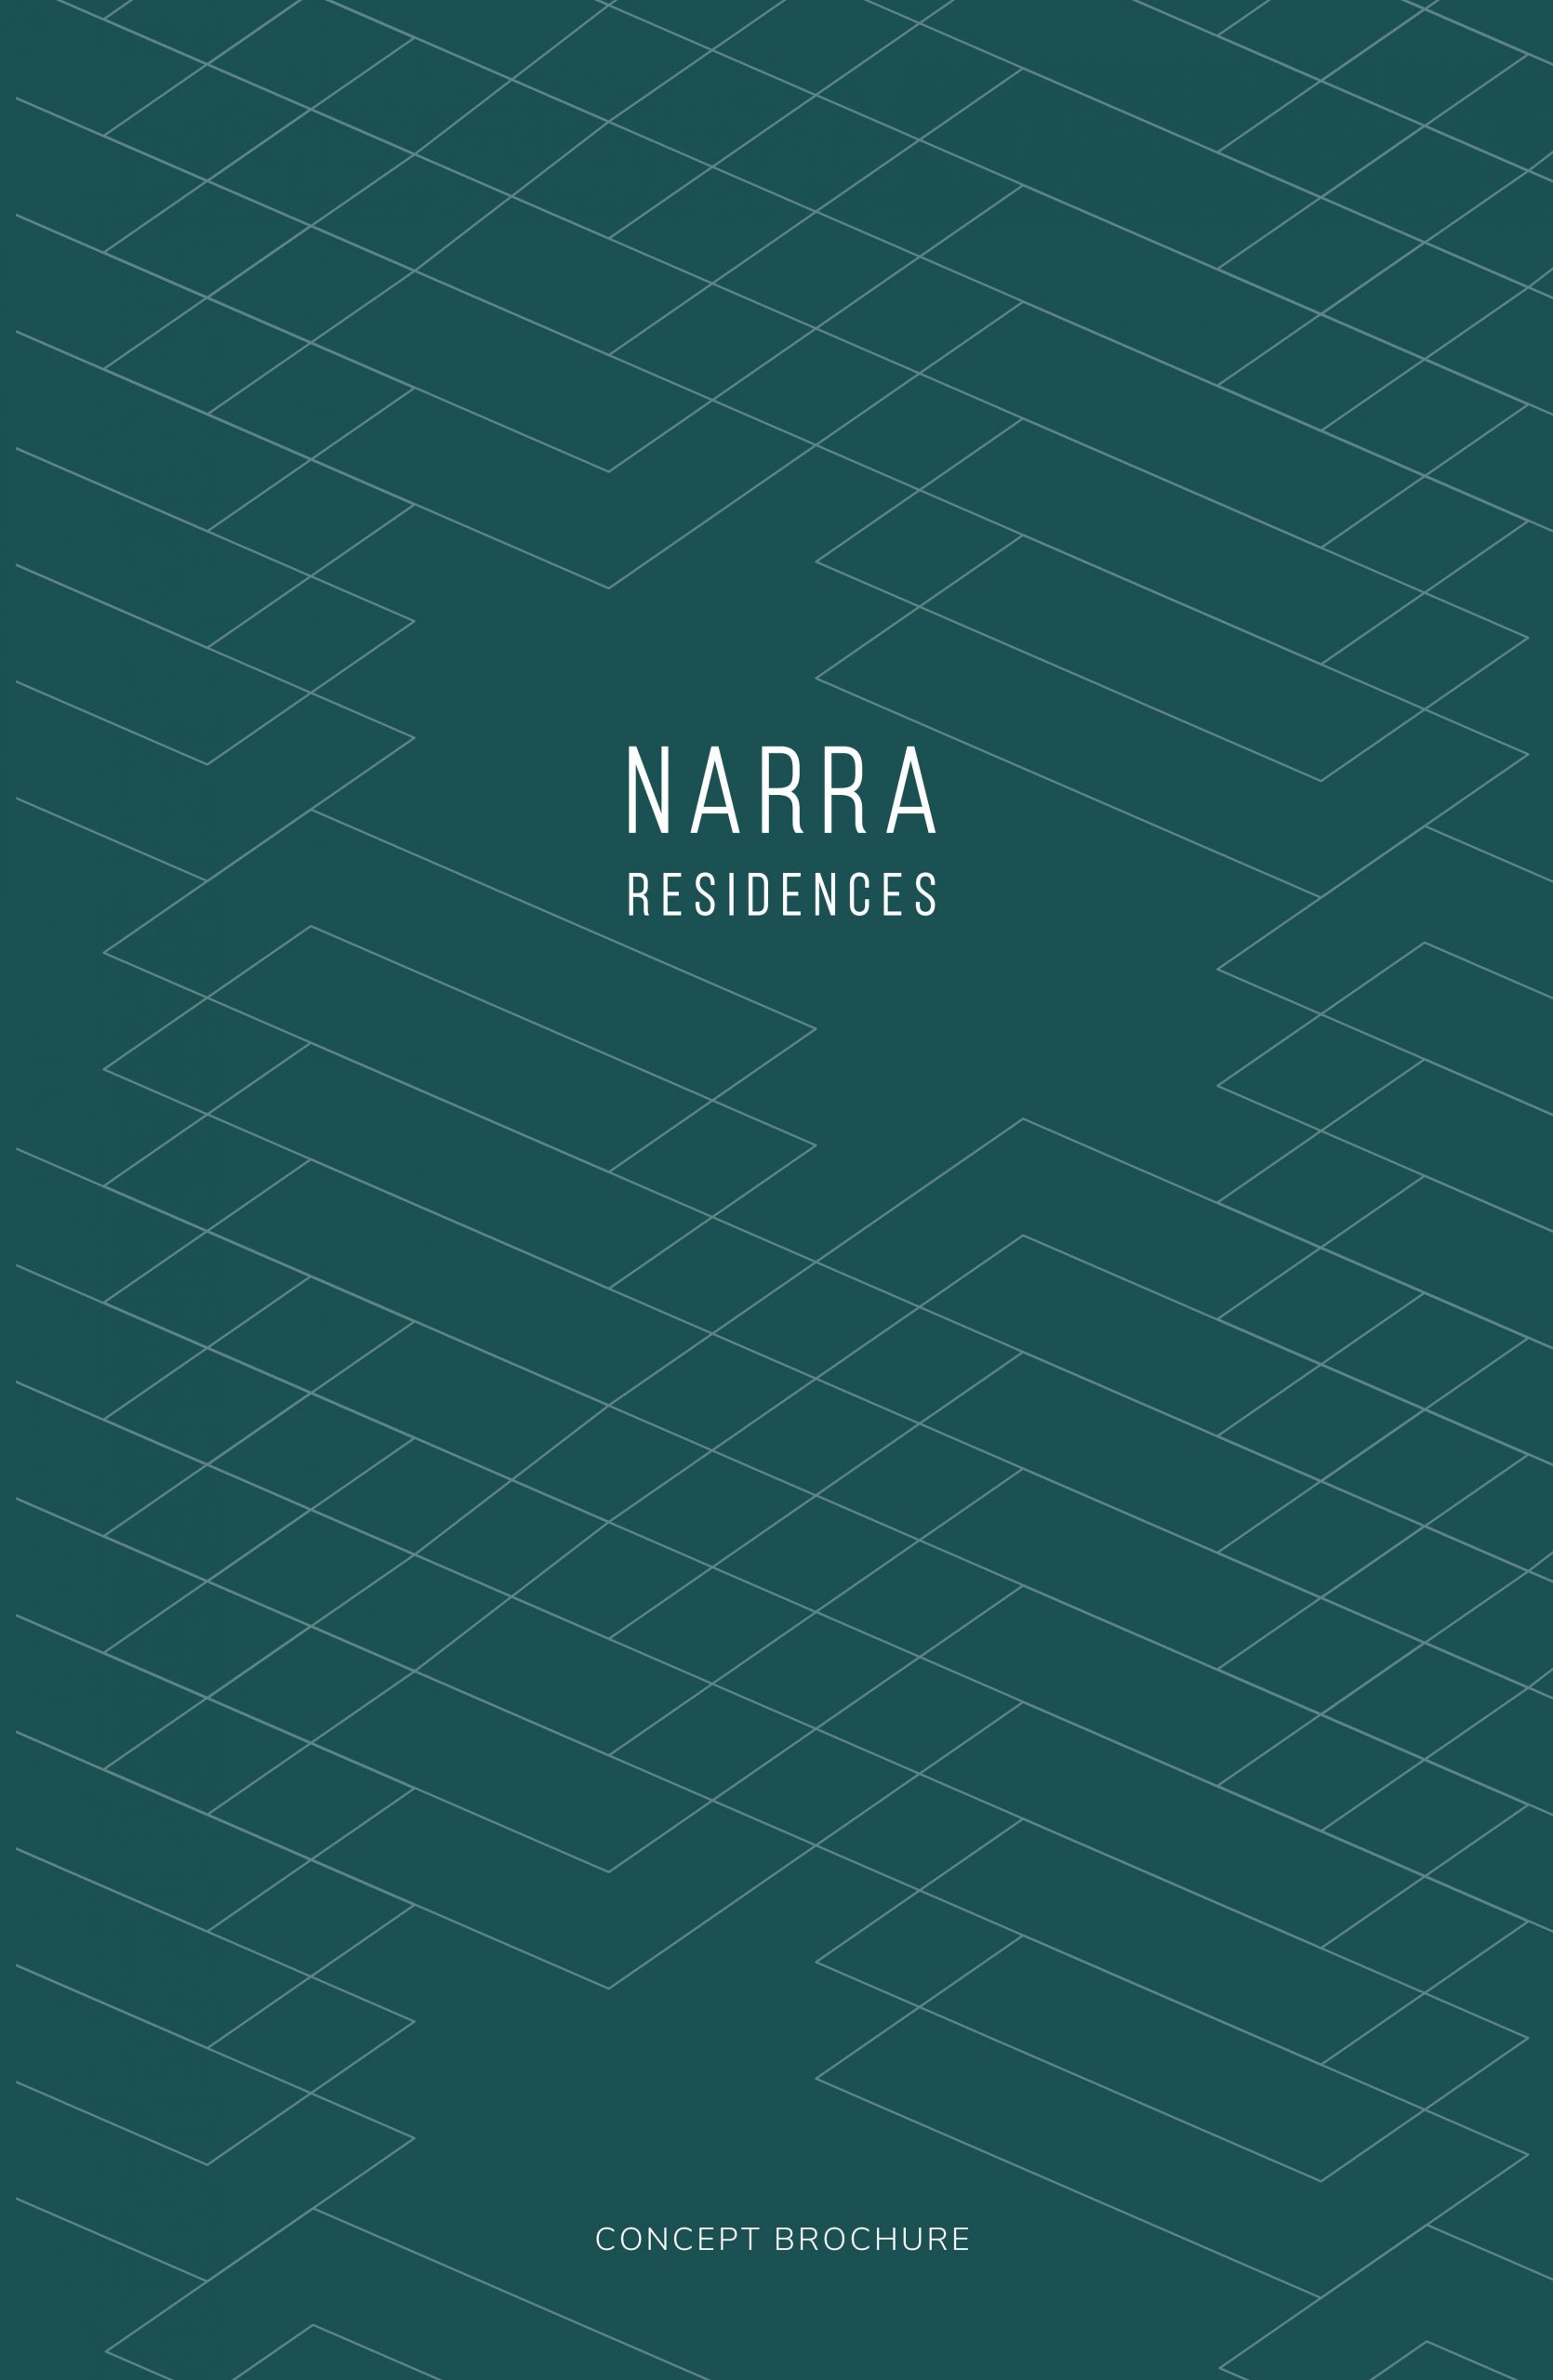 Narra Residences